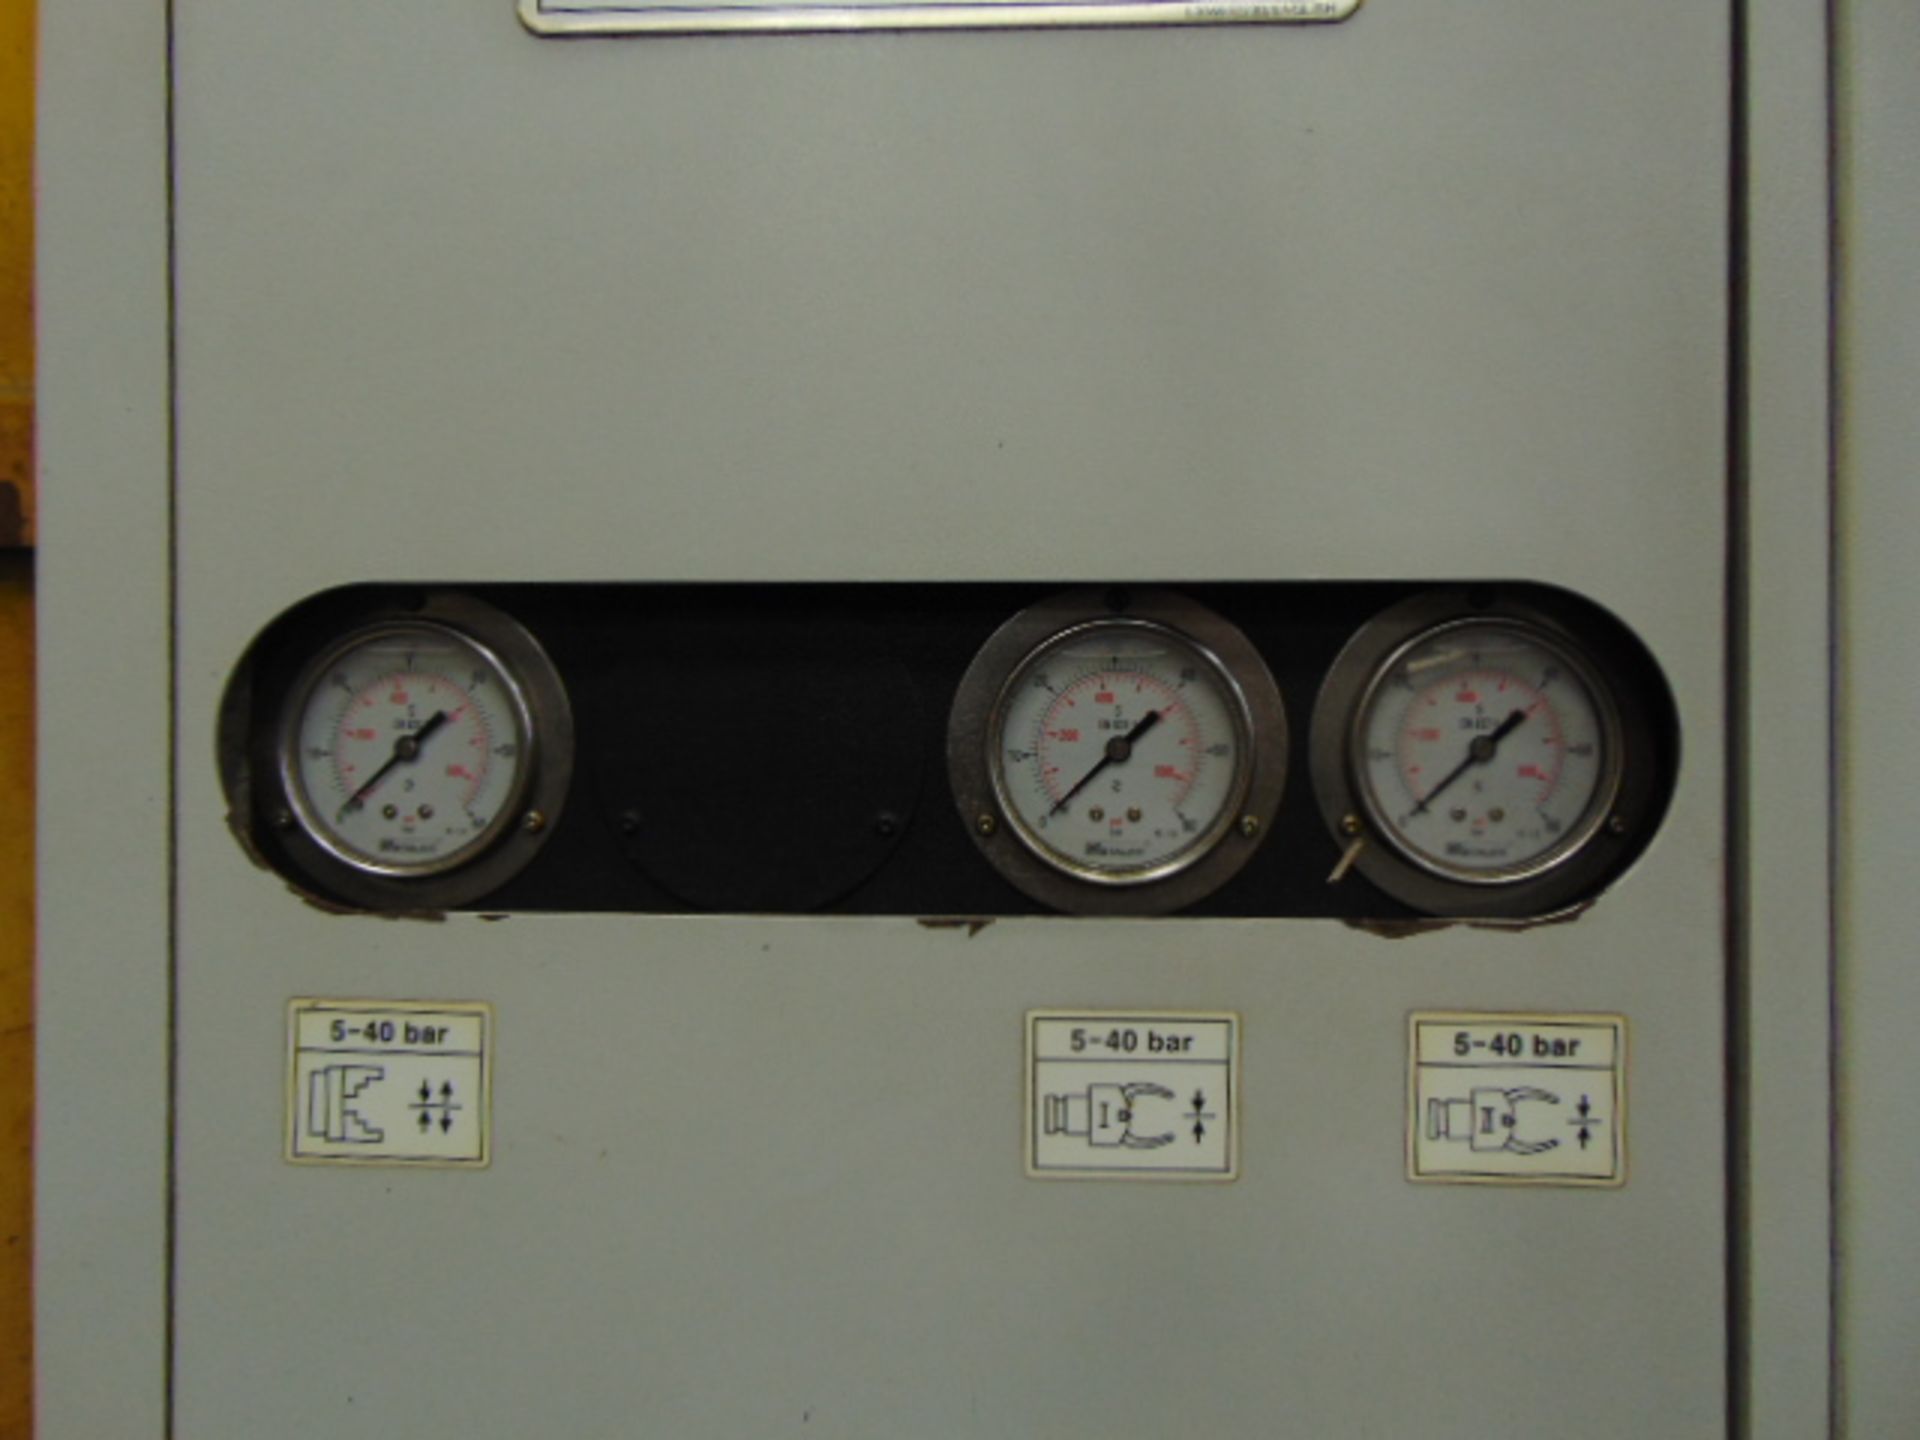 CNC LATHE, DOOSAN PUMA MDL. 480XL, new 1/2012, Fanuc 0i – Mdl. D CNC control, 35'4" swing over - Image 7 of 14